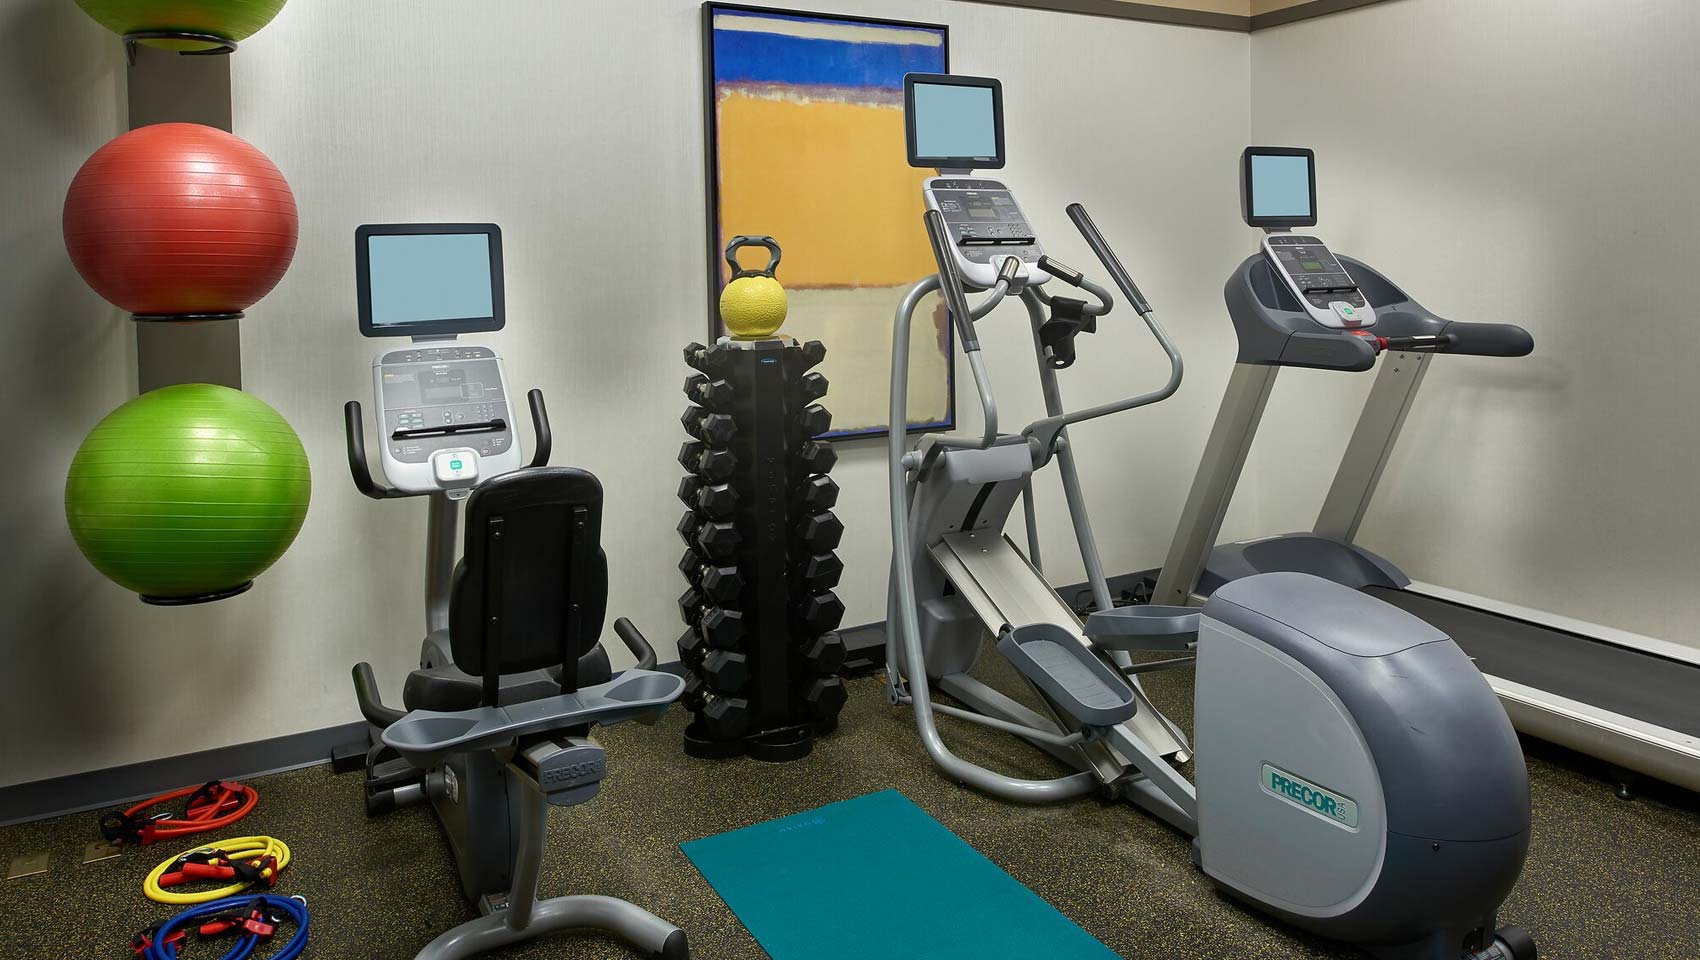 24 hour hotel fitness center